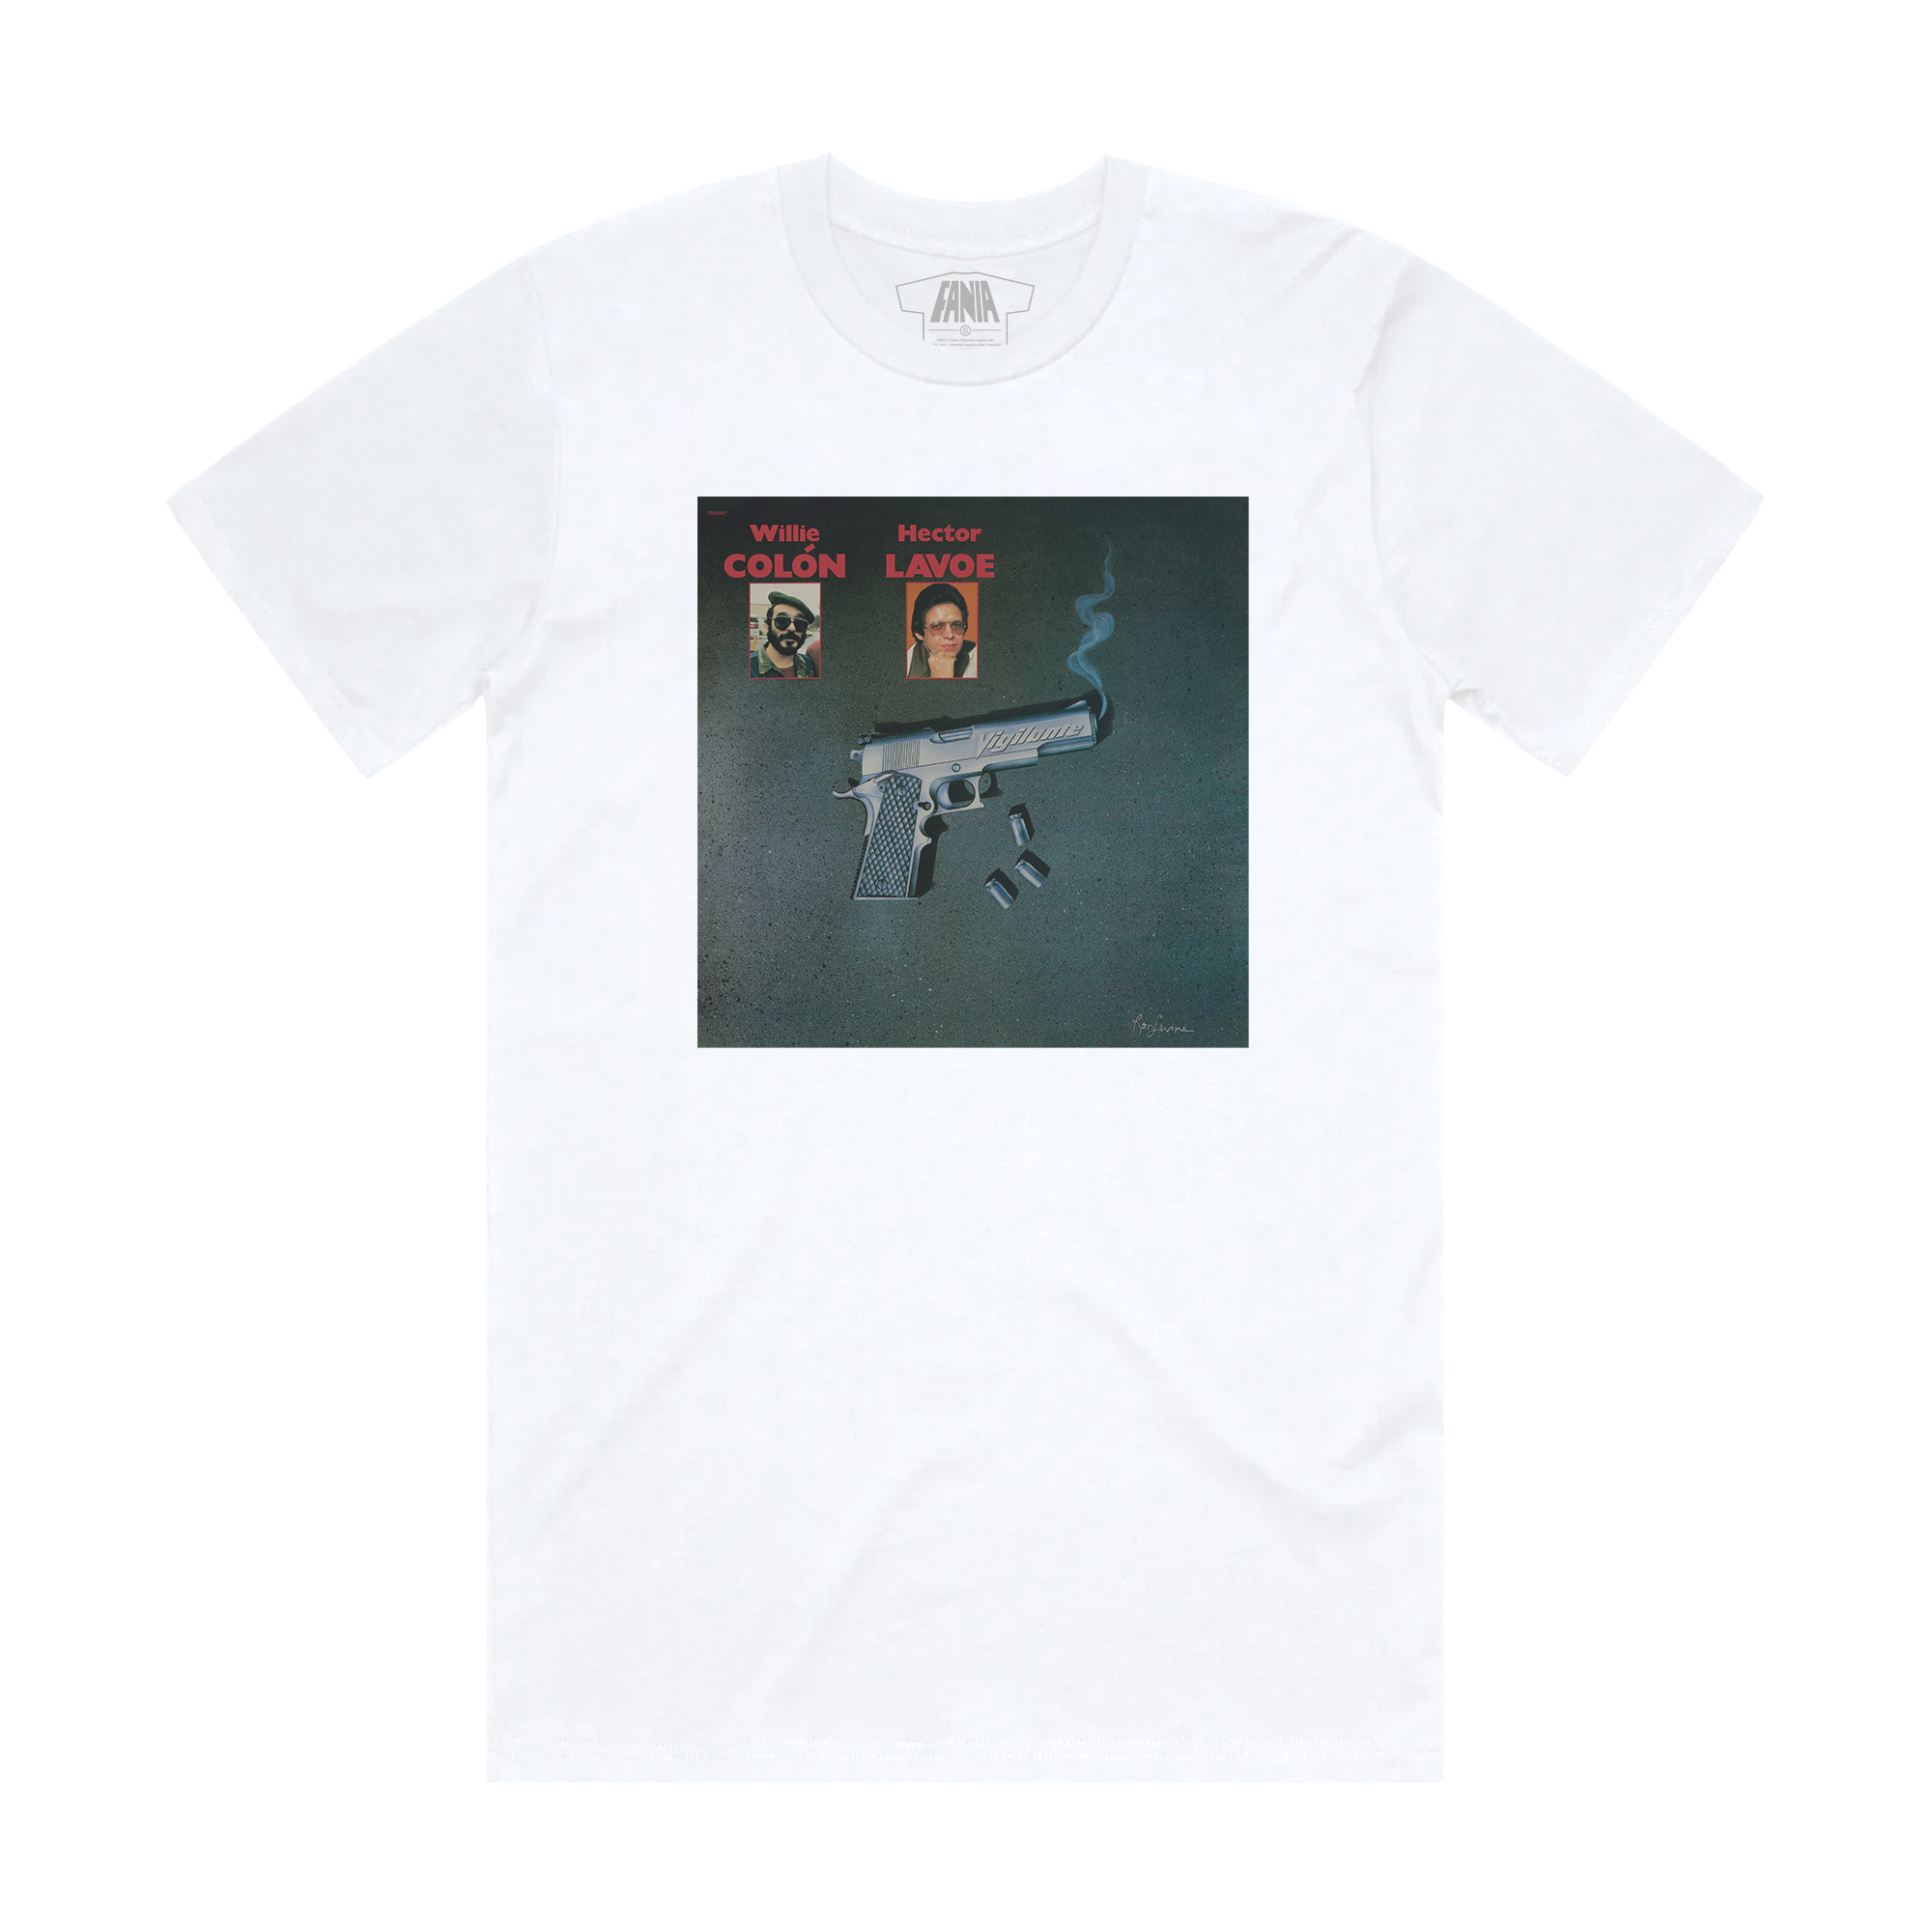 Vigilante T-Shirt